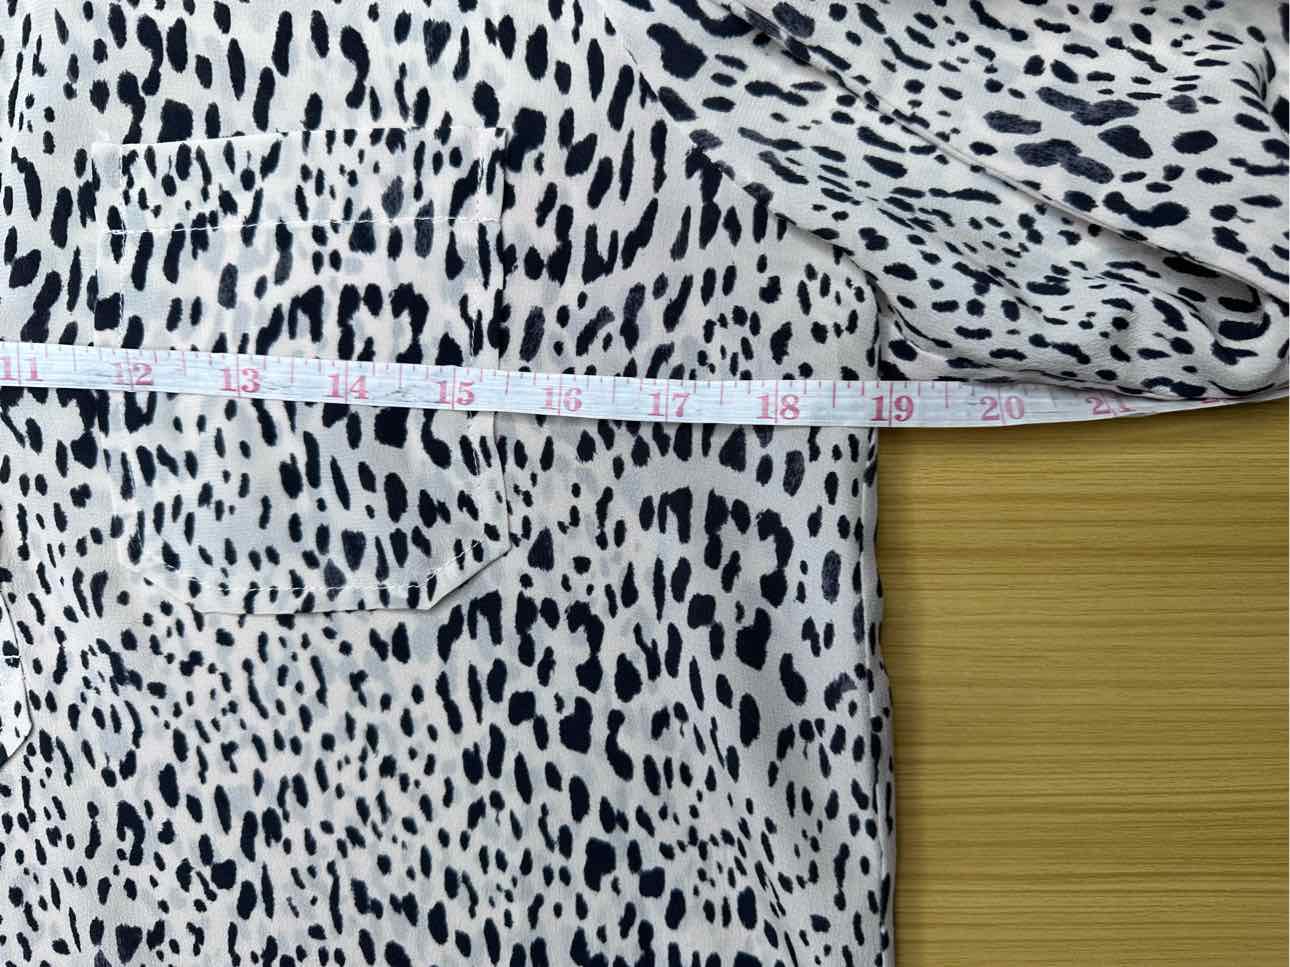 Rebecca Taylor 100% Silk Leopard Print Top Size 0